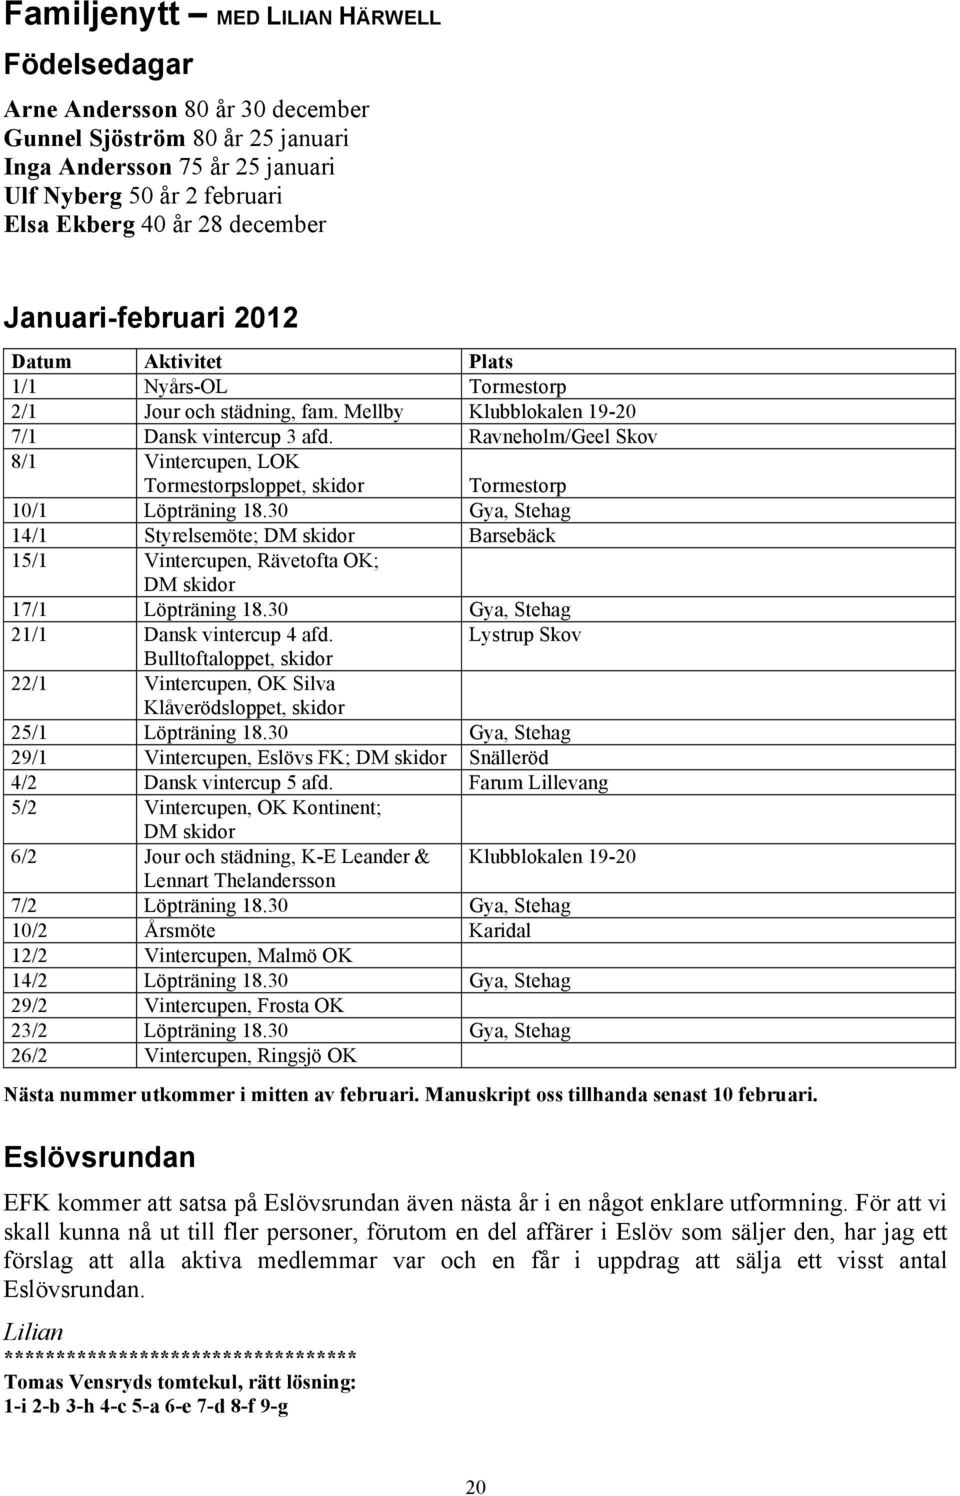 Ravneholm/Geel Skov 8/1 Vintercupen, LOK Tormestorpsloppet, skidor Tormestorp 10/1 Löpträning 18.